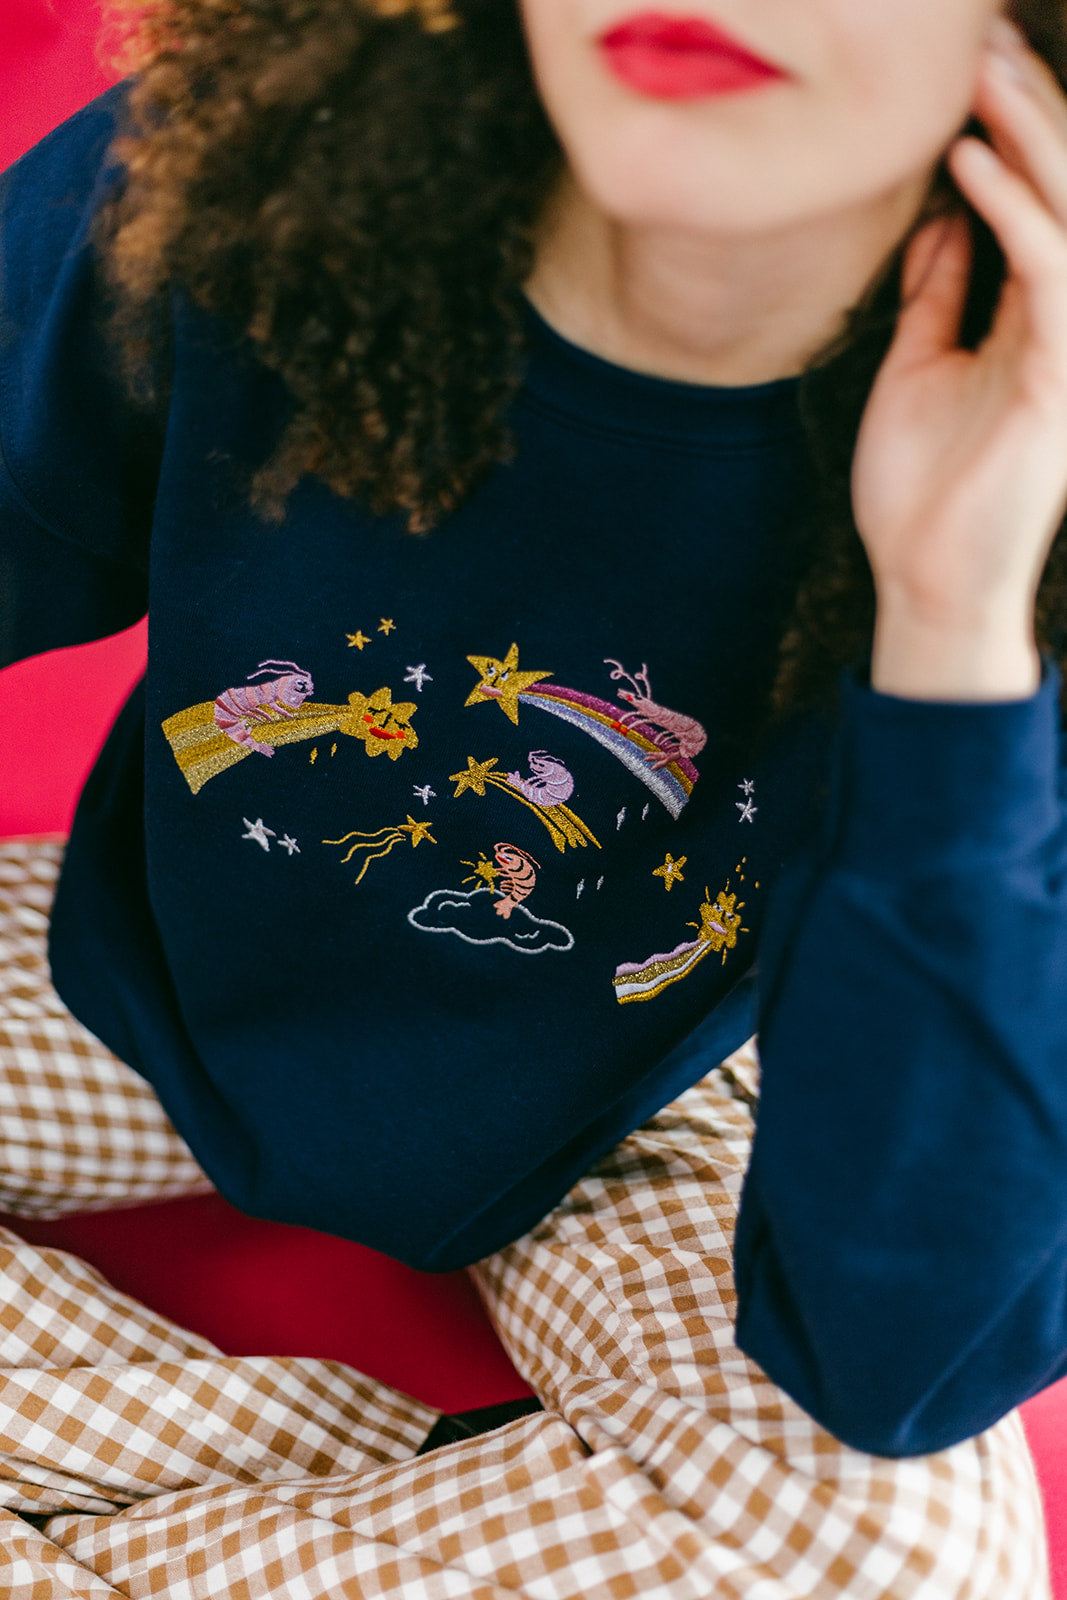 Prawn Stars Glittery Embroidered Sweatshirt